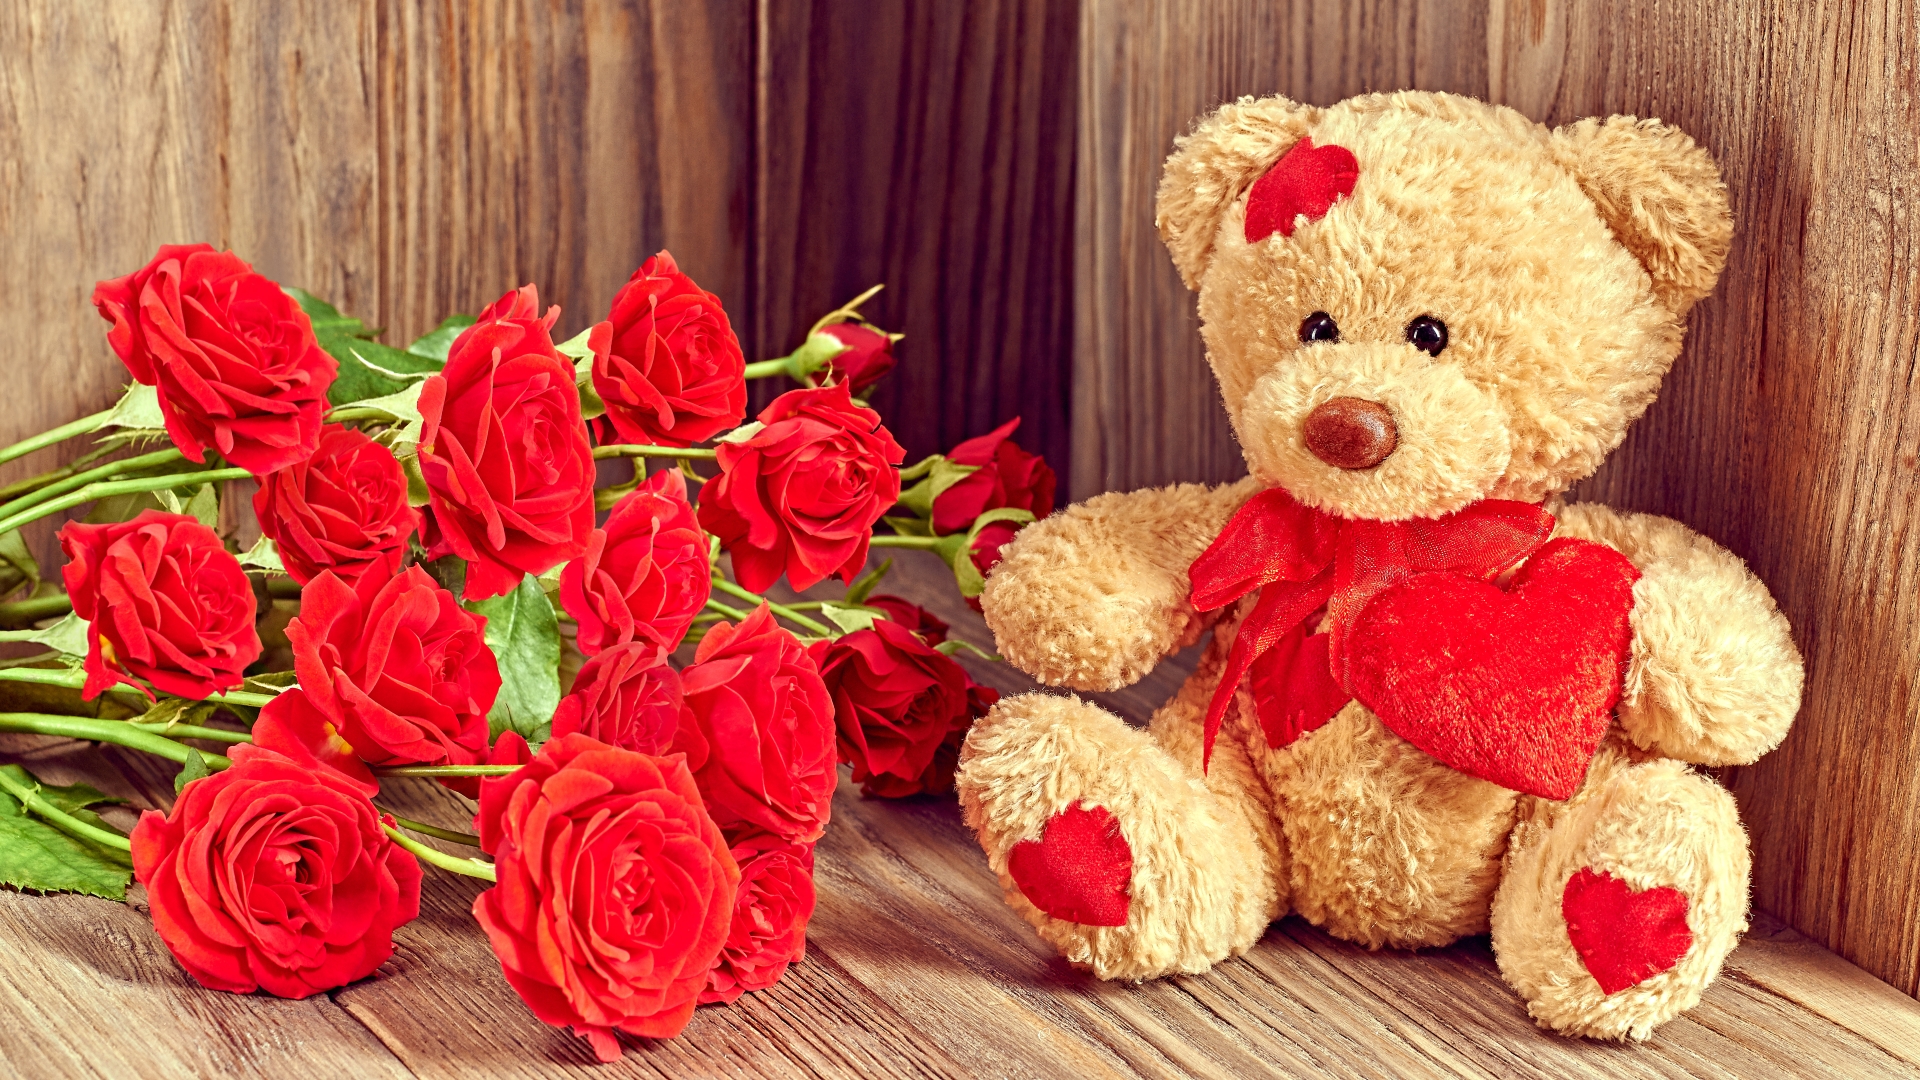 Teddy Bear With Red Roses - Rose Wallpaper Teddy Bear - HD Wallpaper 